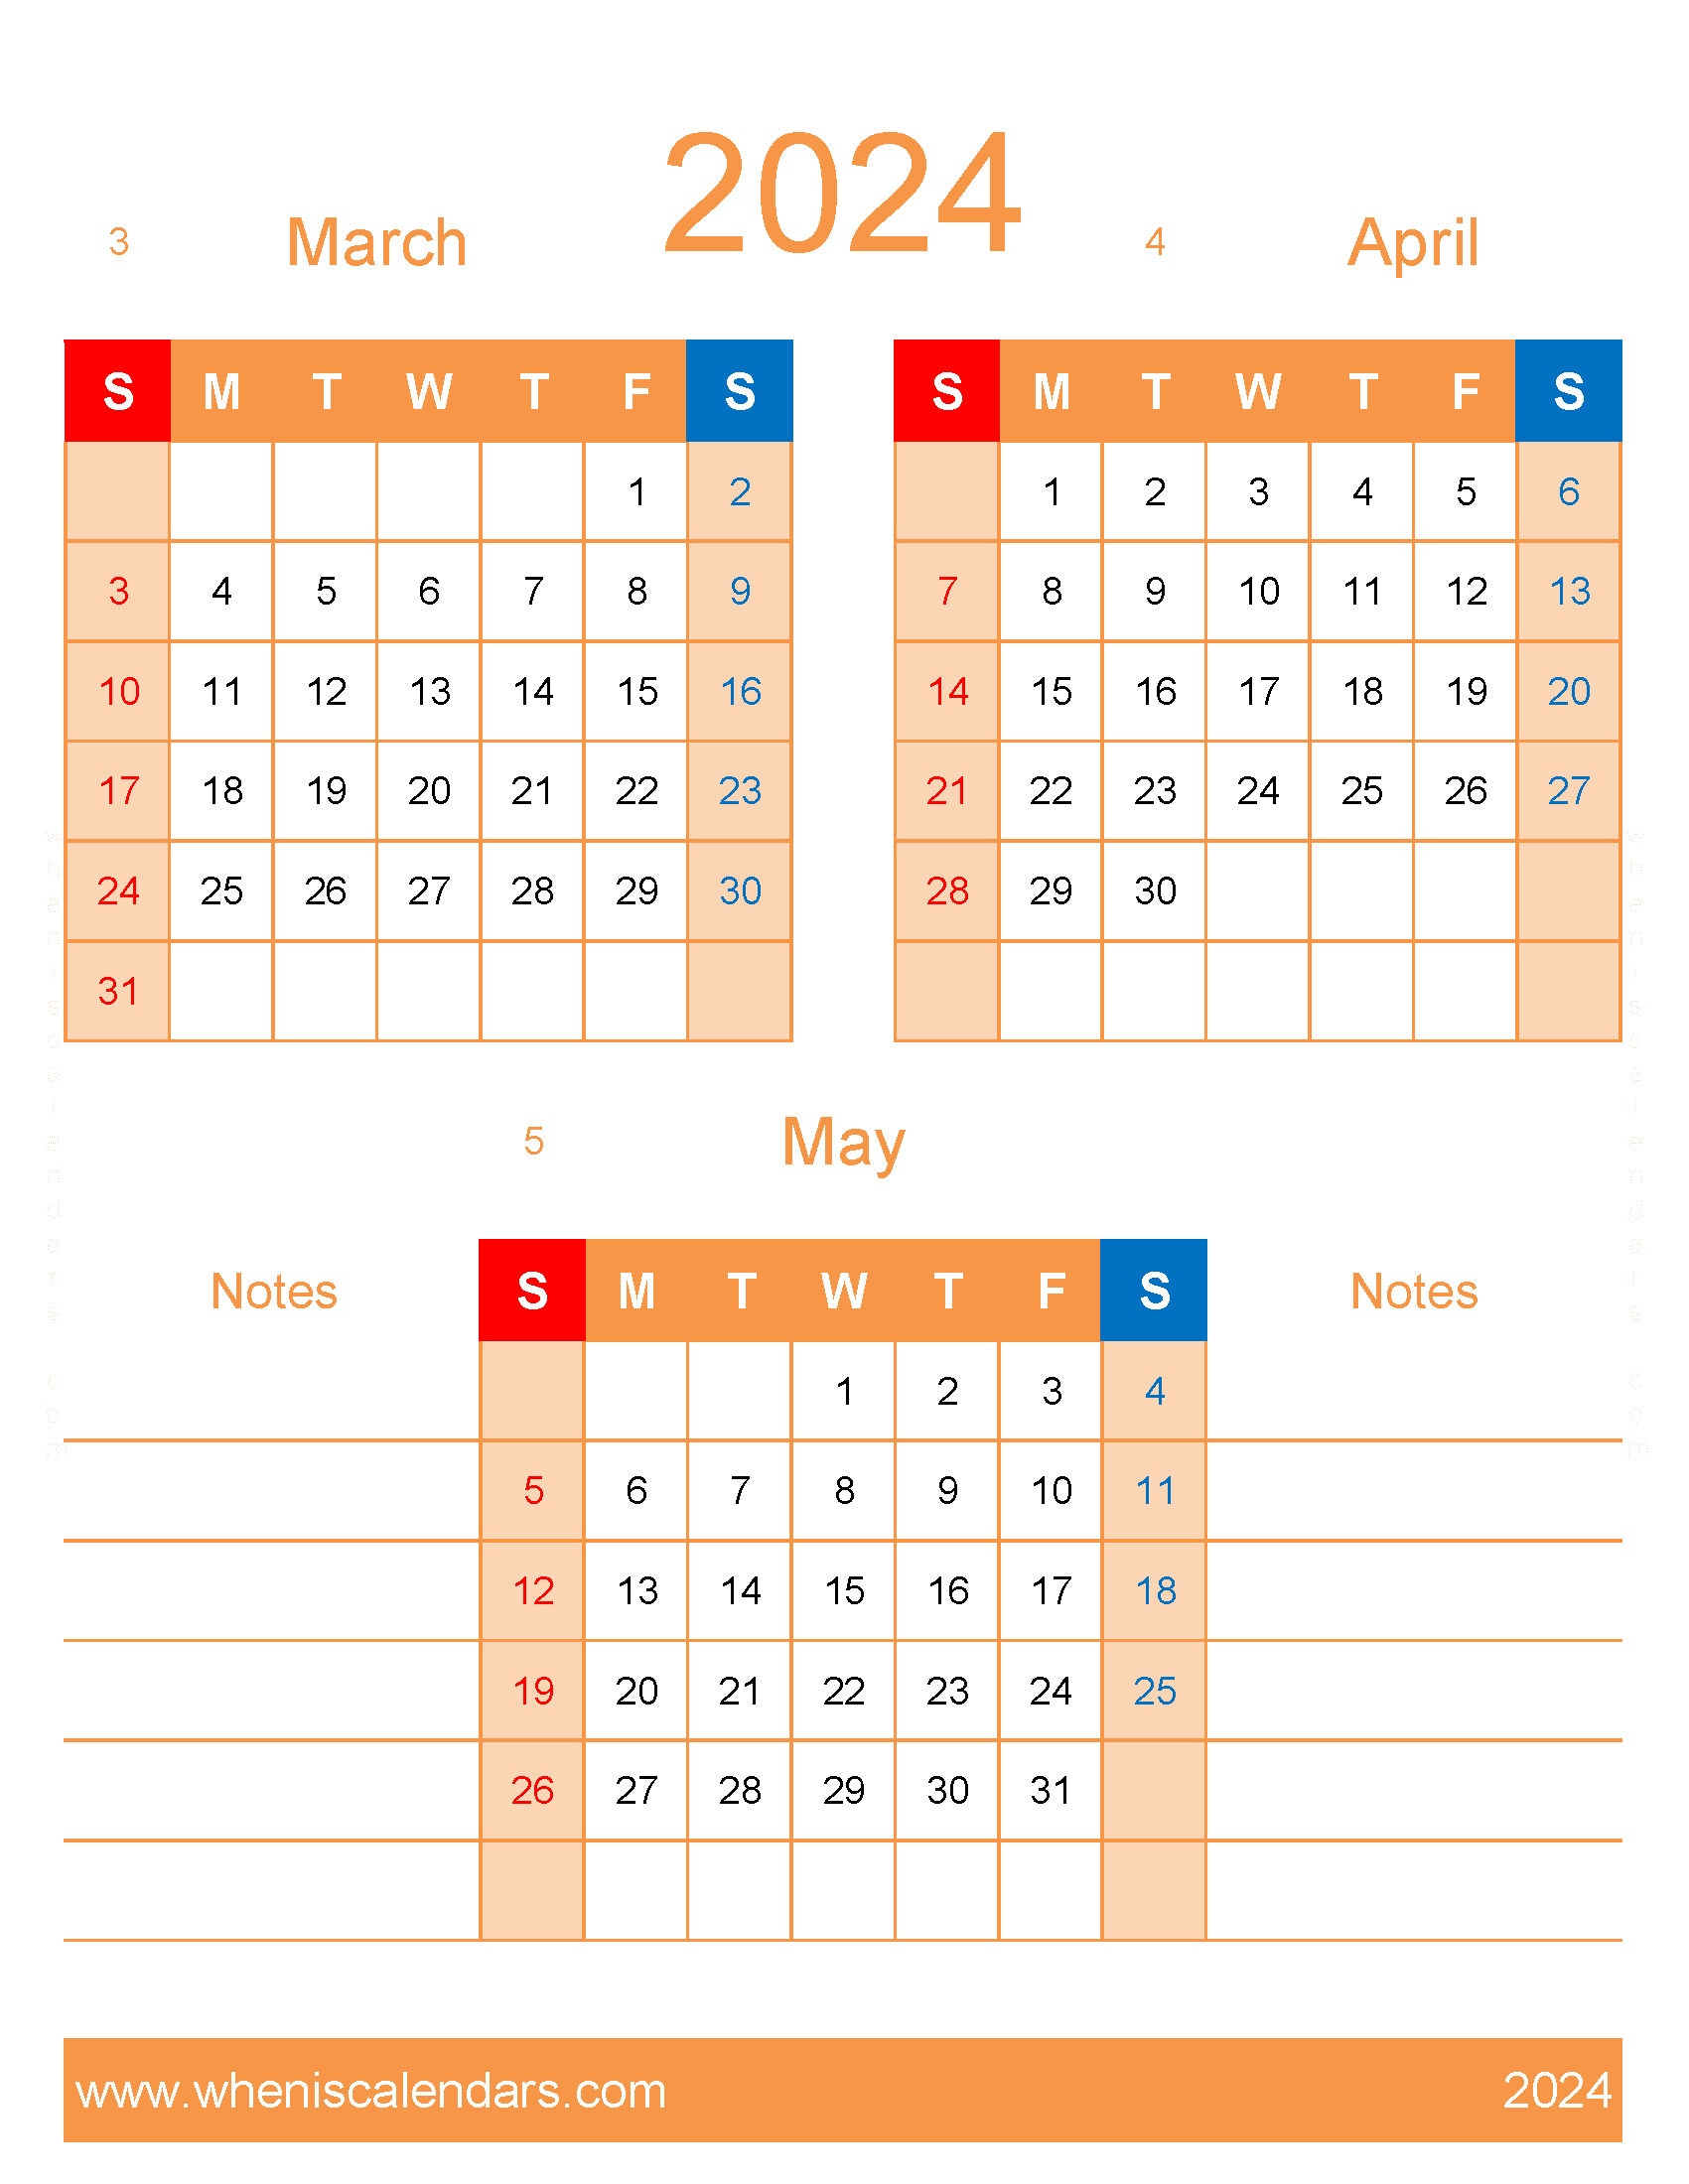 Download calendar Mar Apr May 2024 MAM466